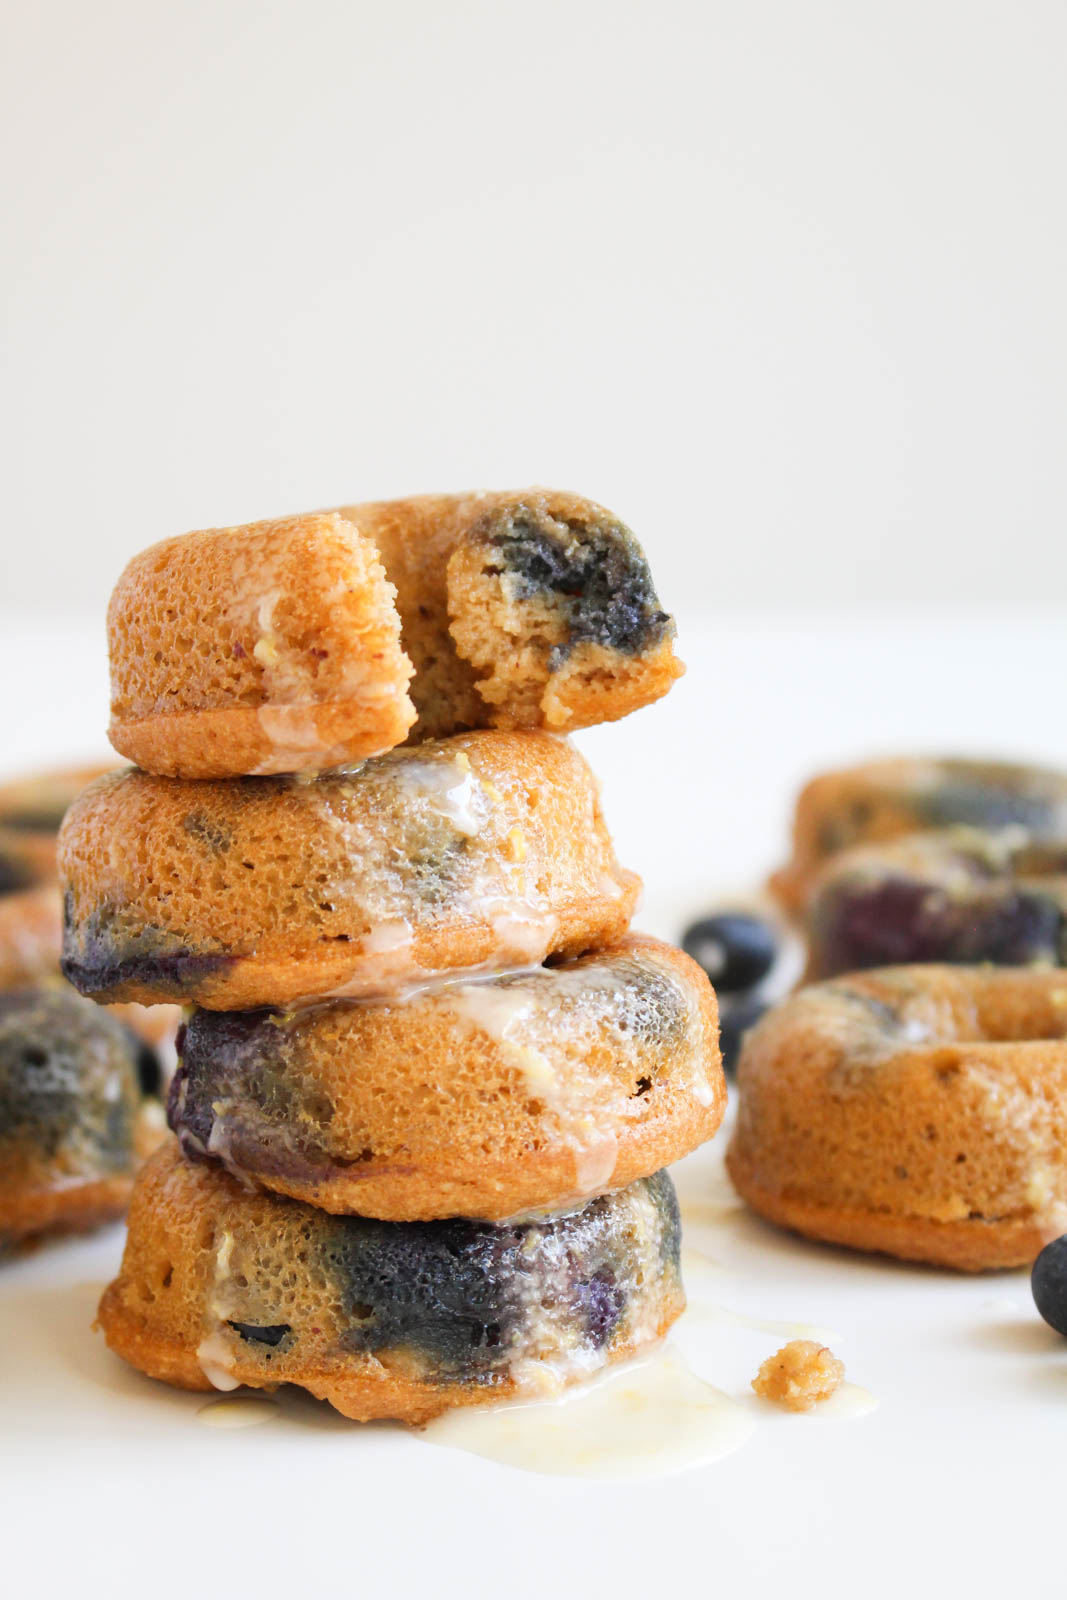 [Grain-Free] Blueberry Donuts & Sweet Lemon Glaze